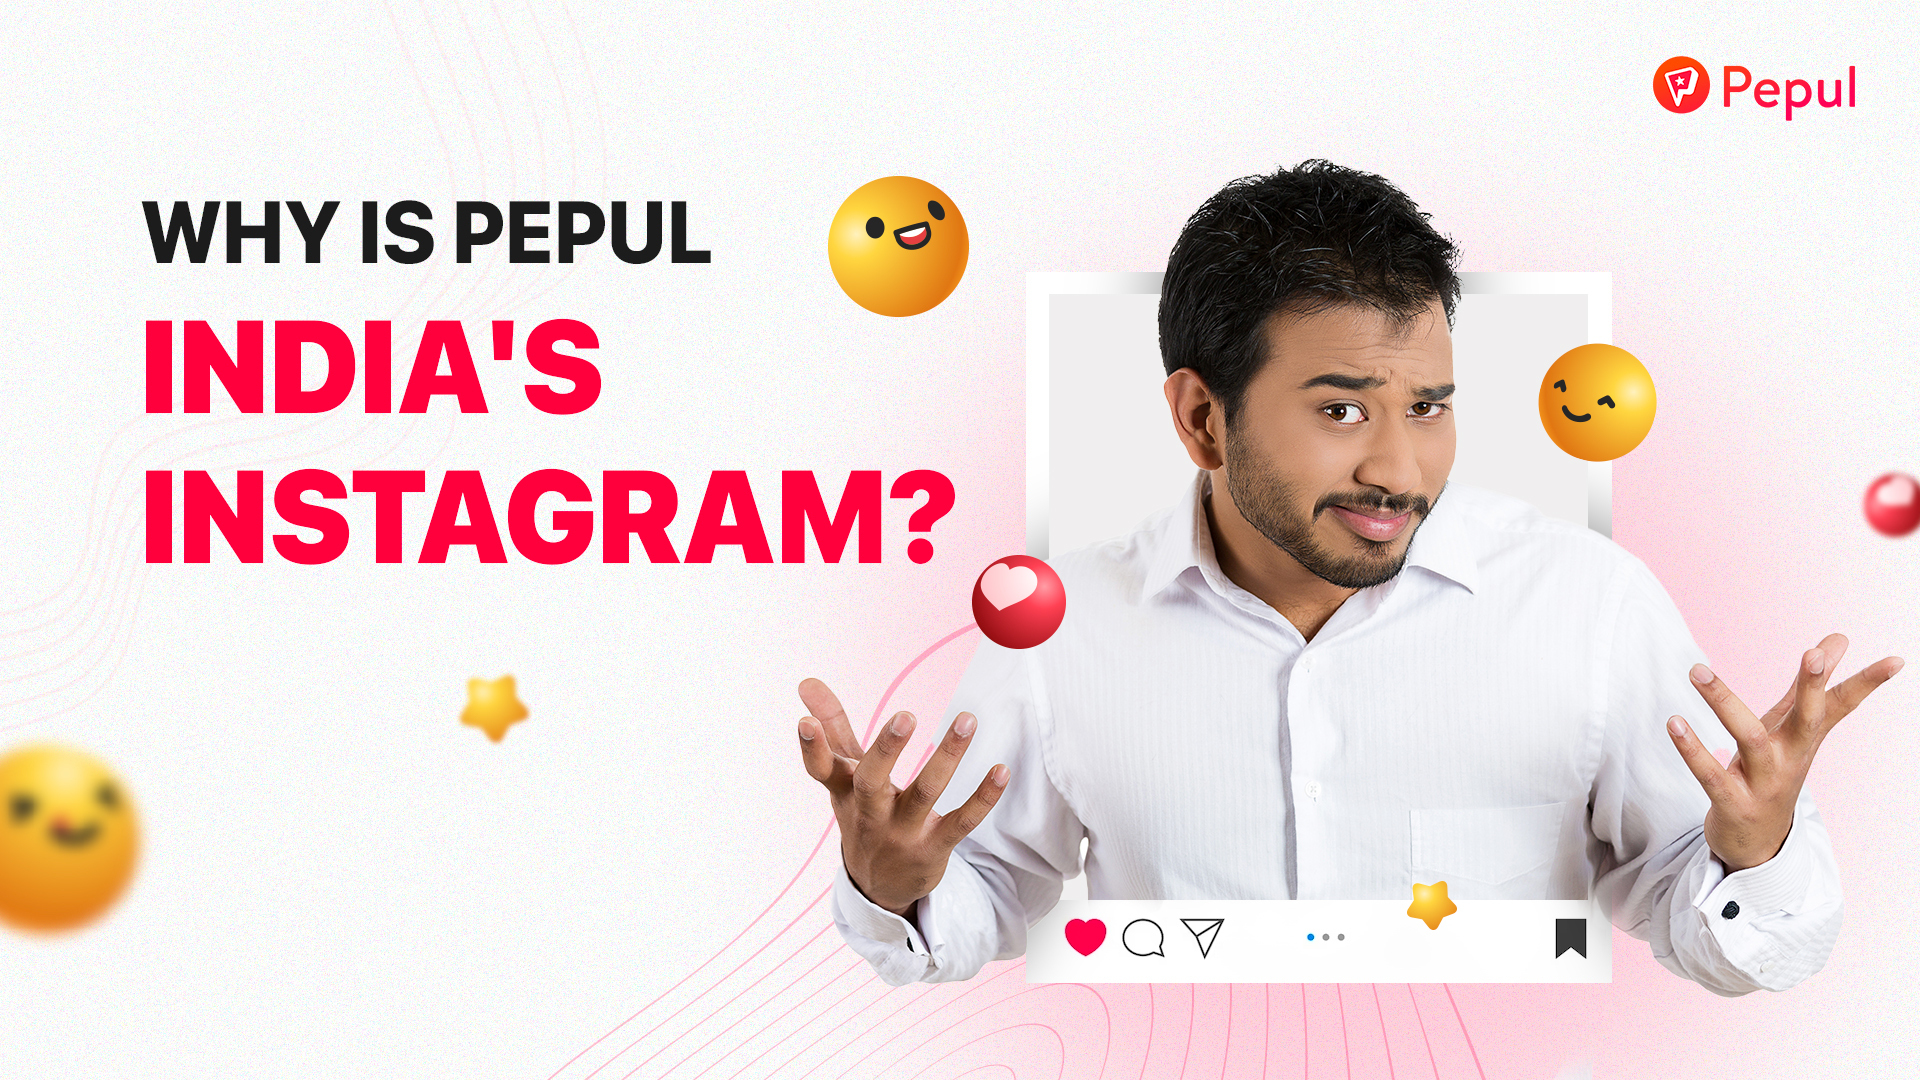 Why is the Pepul app India’s Instagram?